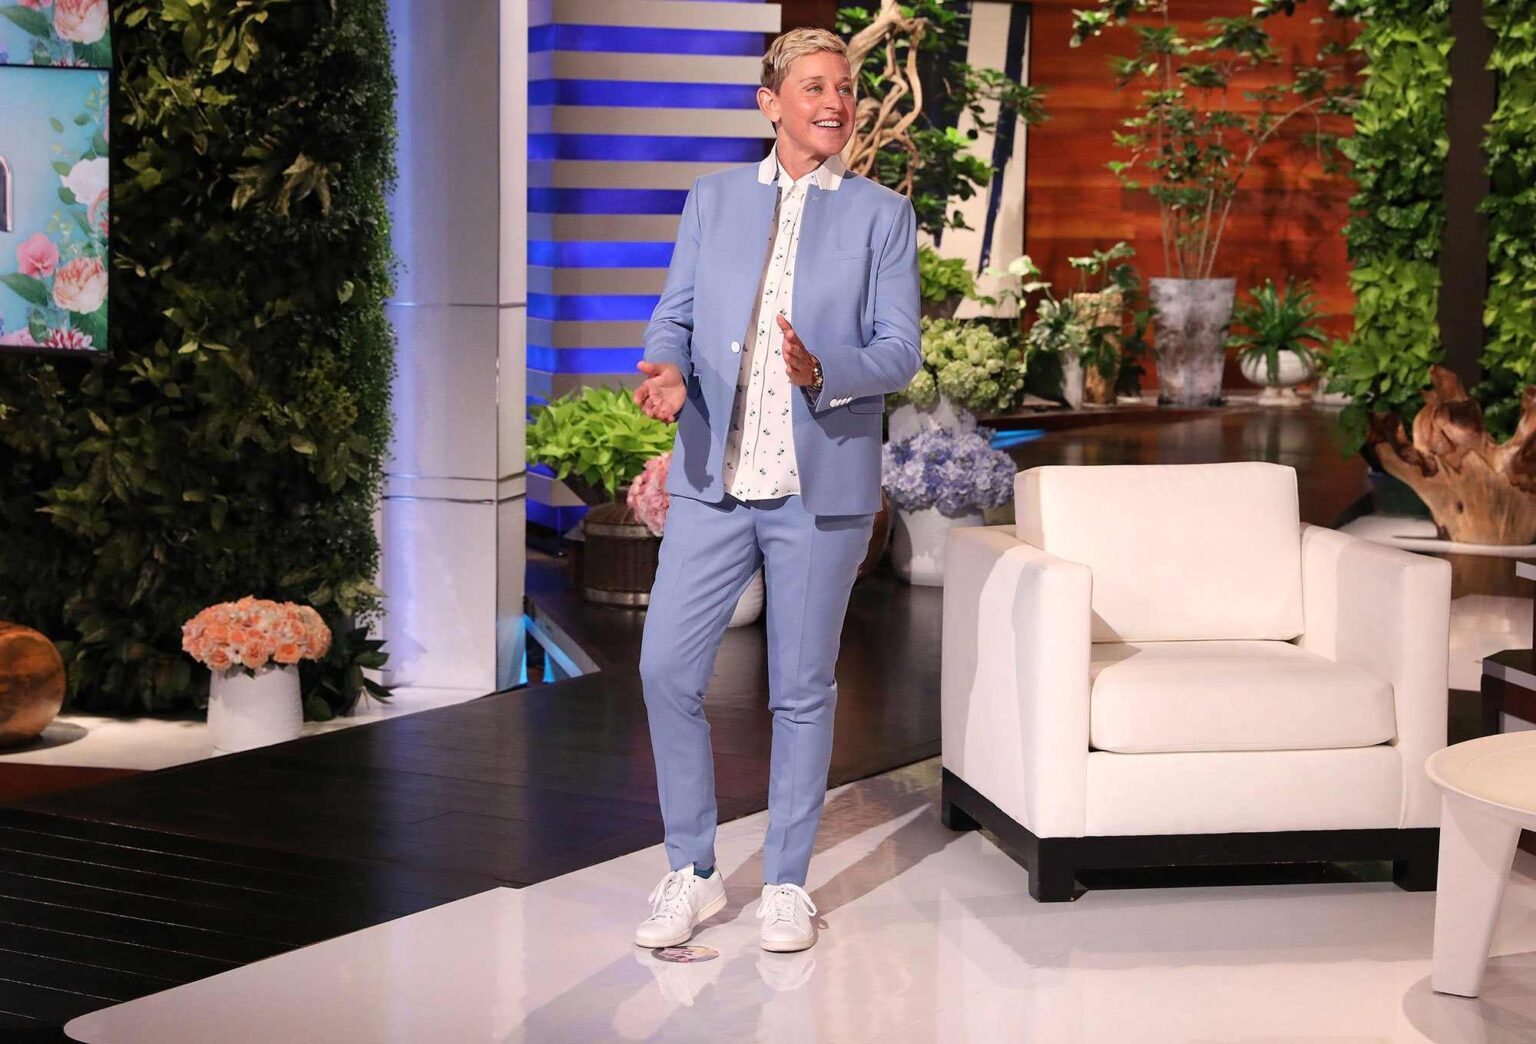 In case you’ve been living under a rock, times are changing. 'The Ellen DeGeneres Show' is over, but is Ellen DeGeneres still mean?